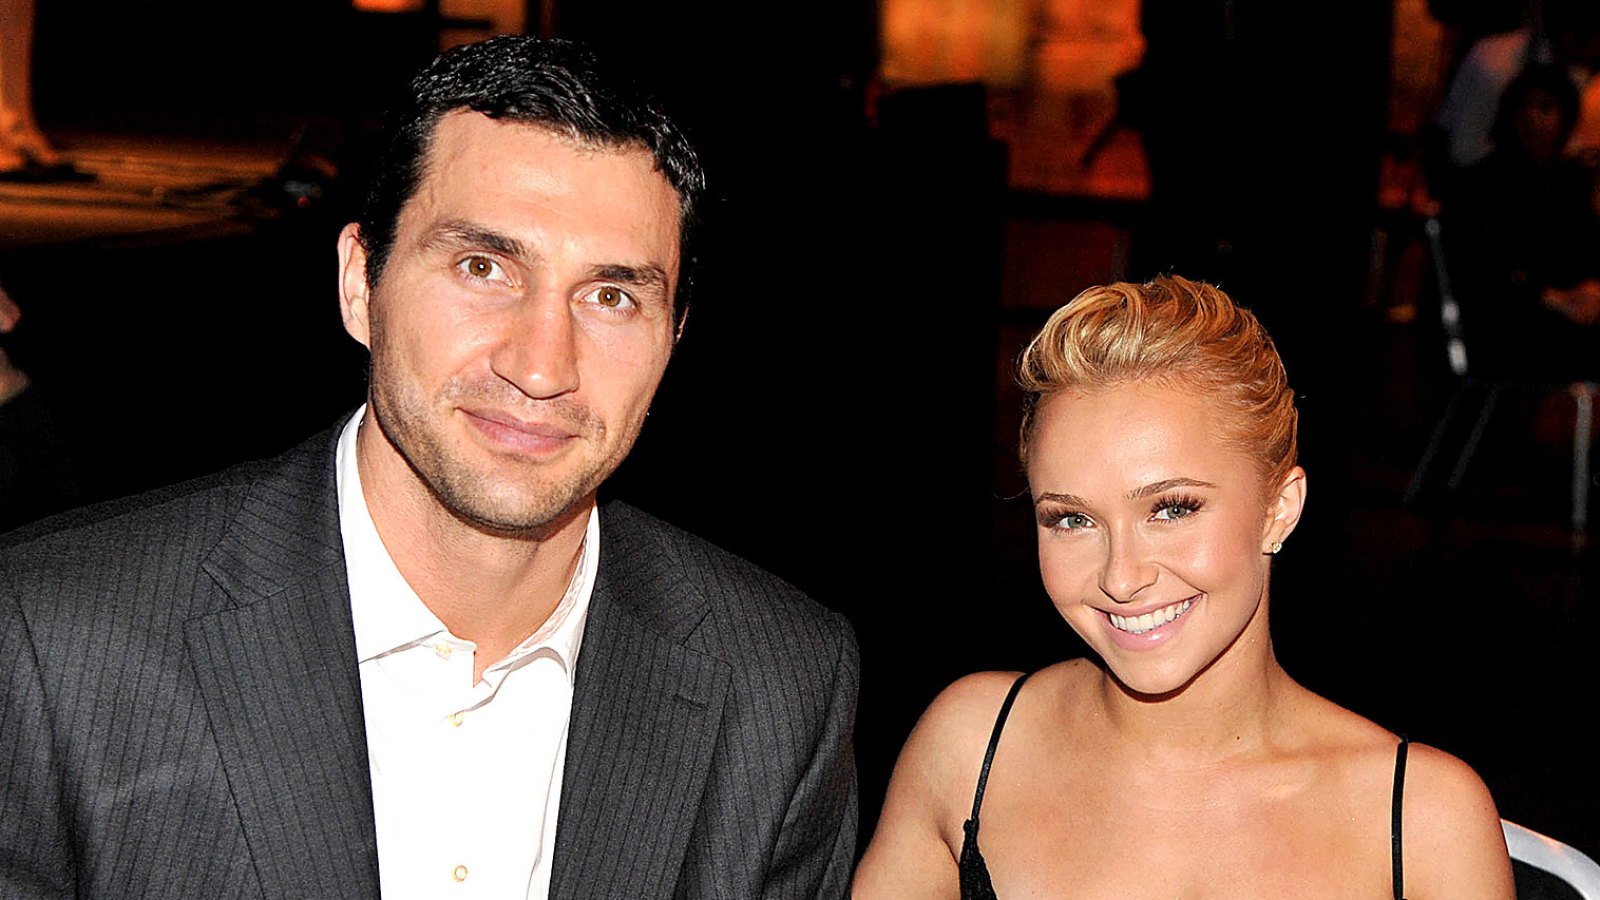 Hayden Panettiere and Wladimir Klitschko Have a Great Coparenting Relationship Raising Daughter Kaya